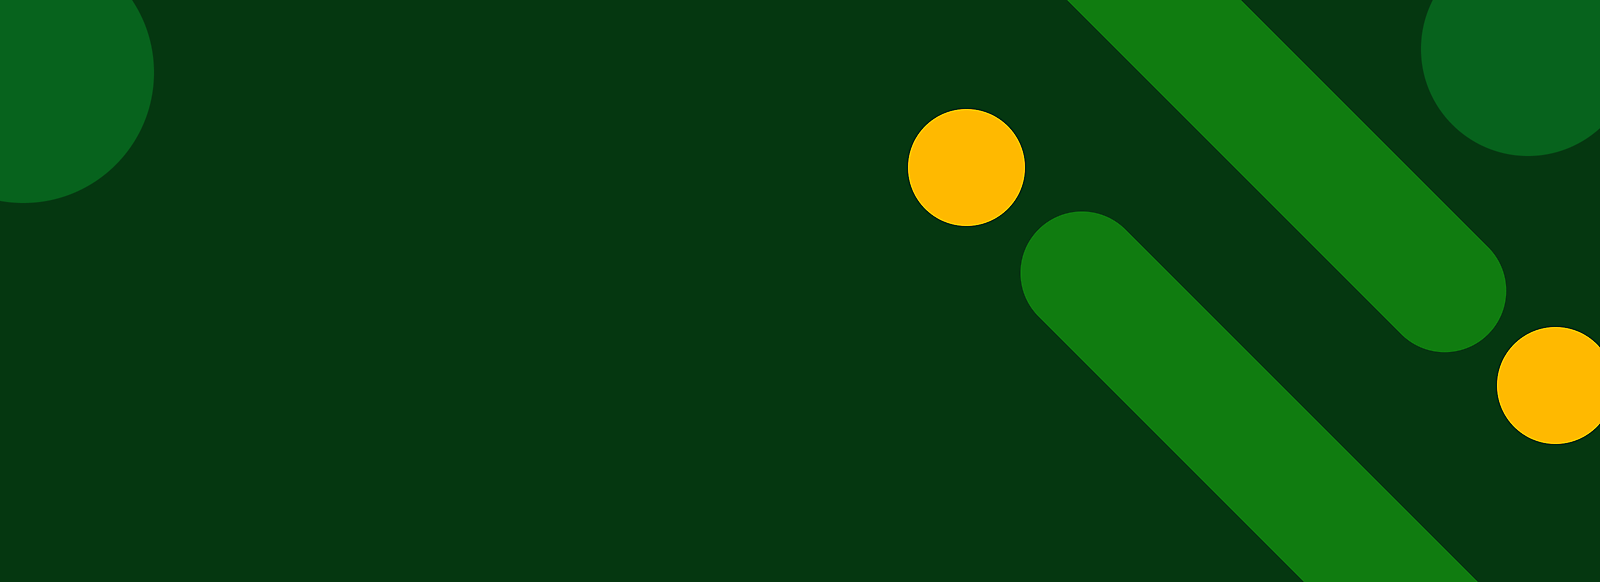 Abstracte groene achtergrond met gele stippen en diagonale groene strepen.